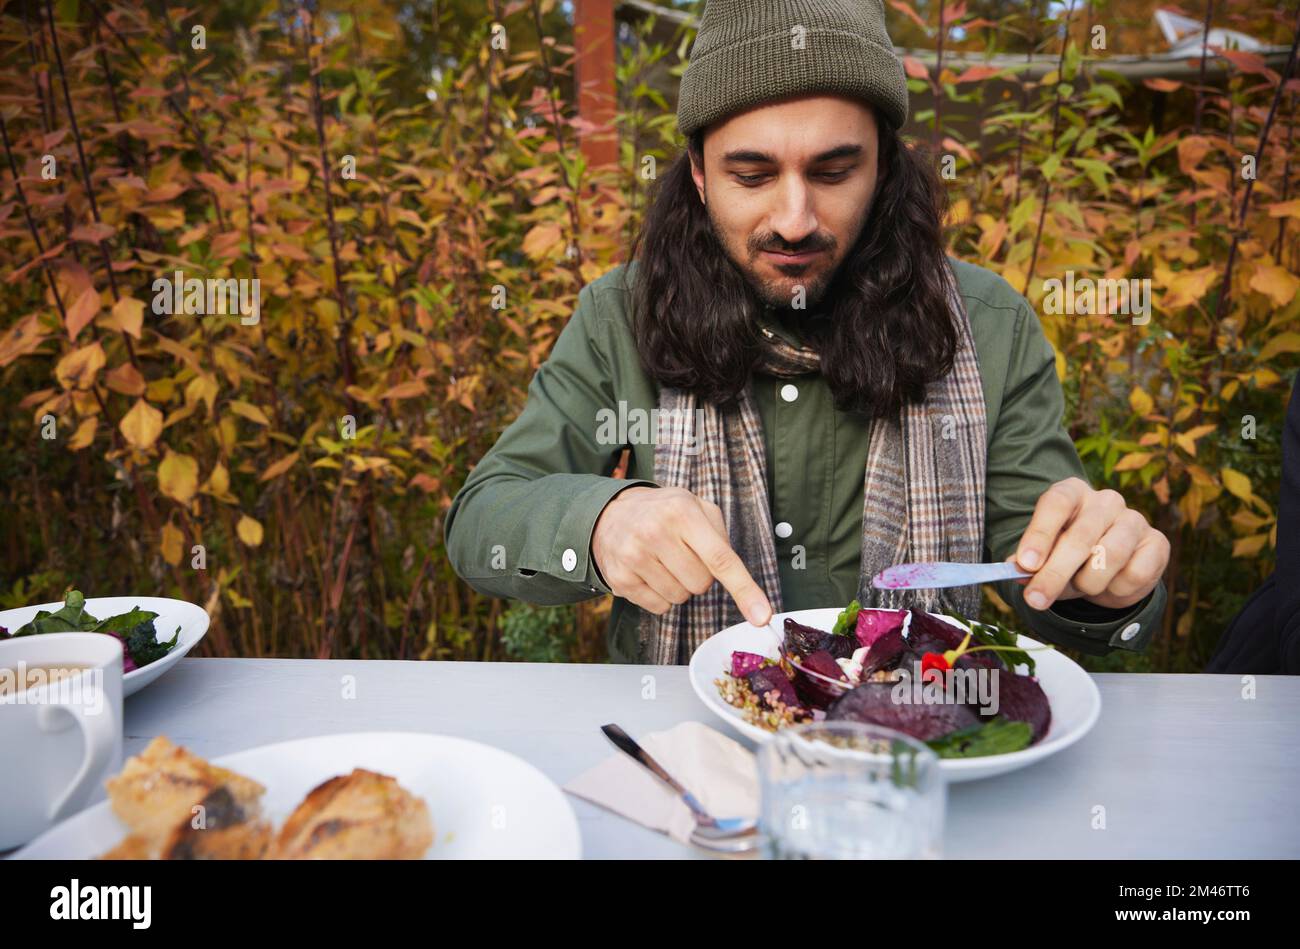 Man eating outdoors Stock Photo